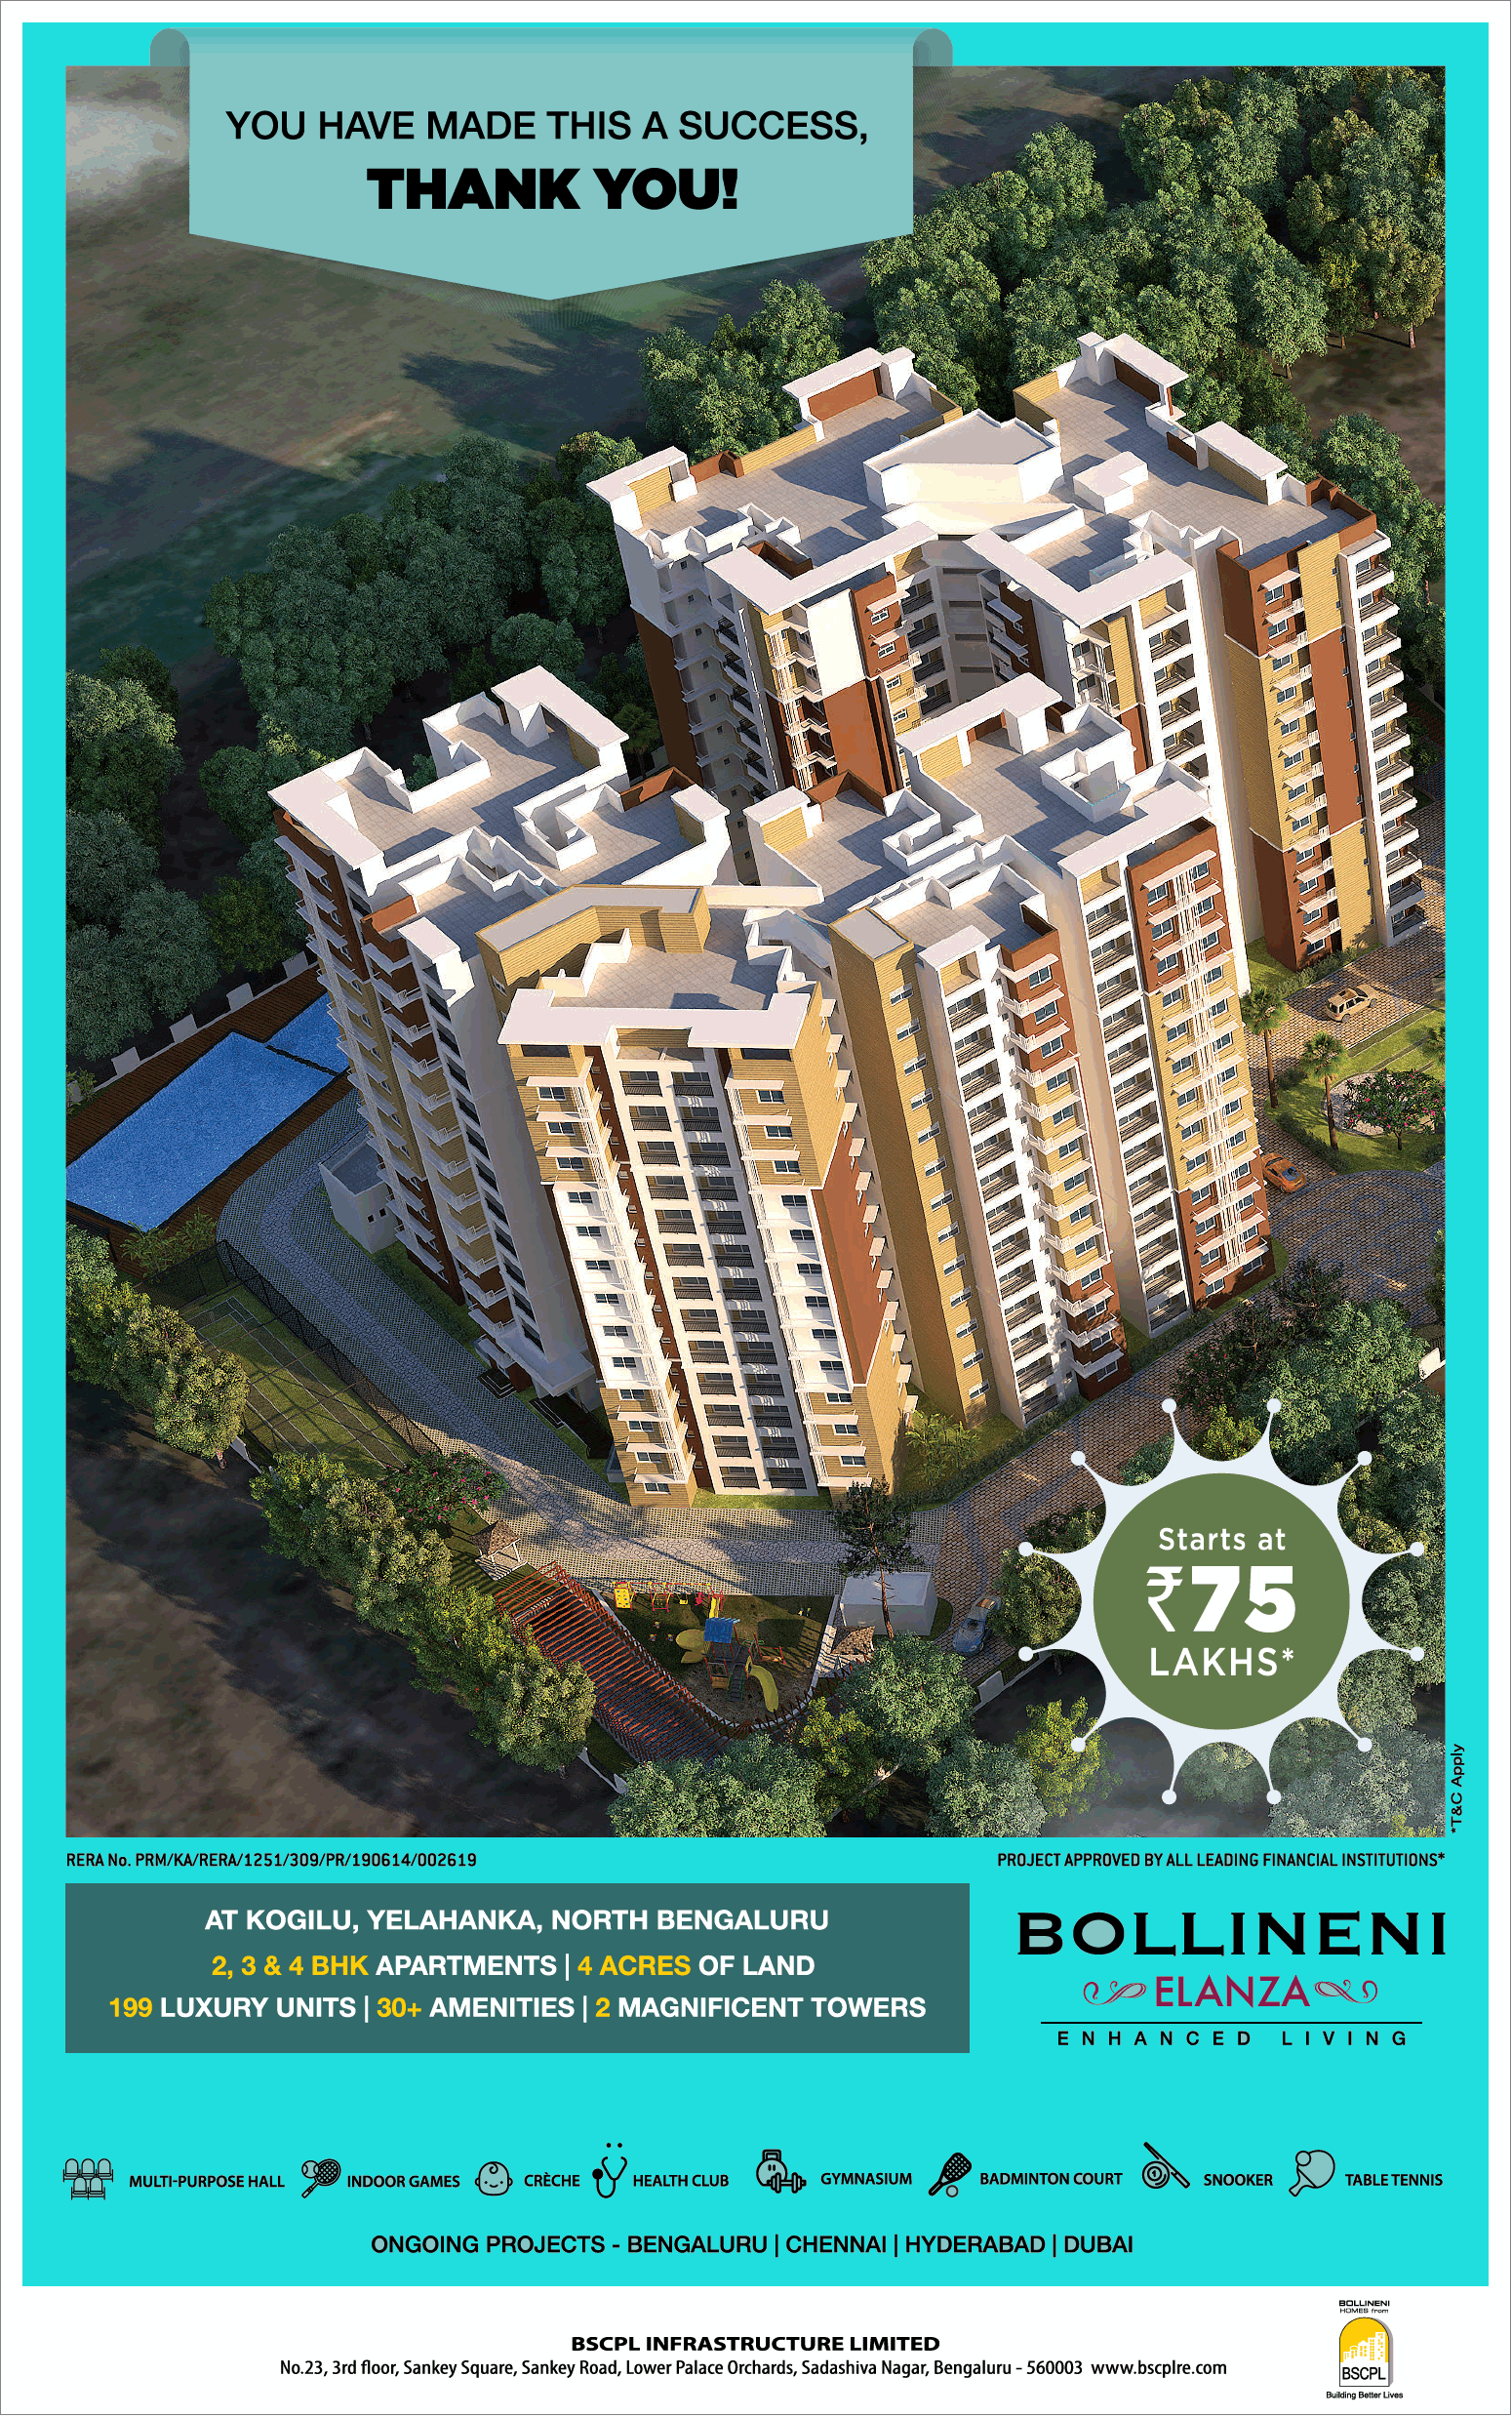 Apartment starting at Rs 75 lakh onwards in Bollineni Elanza, Bangalore Update